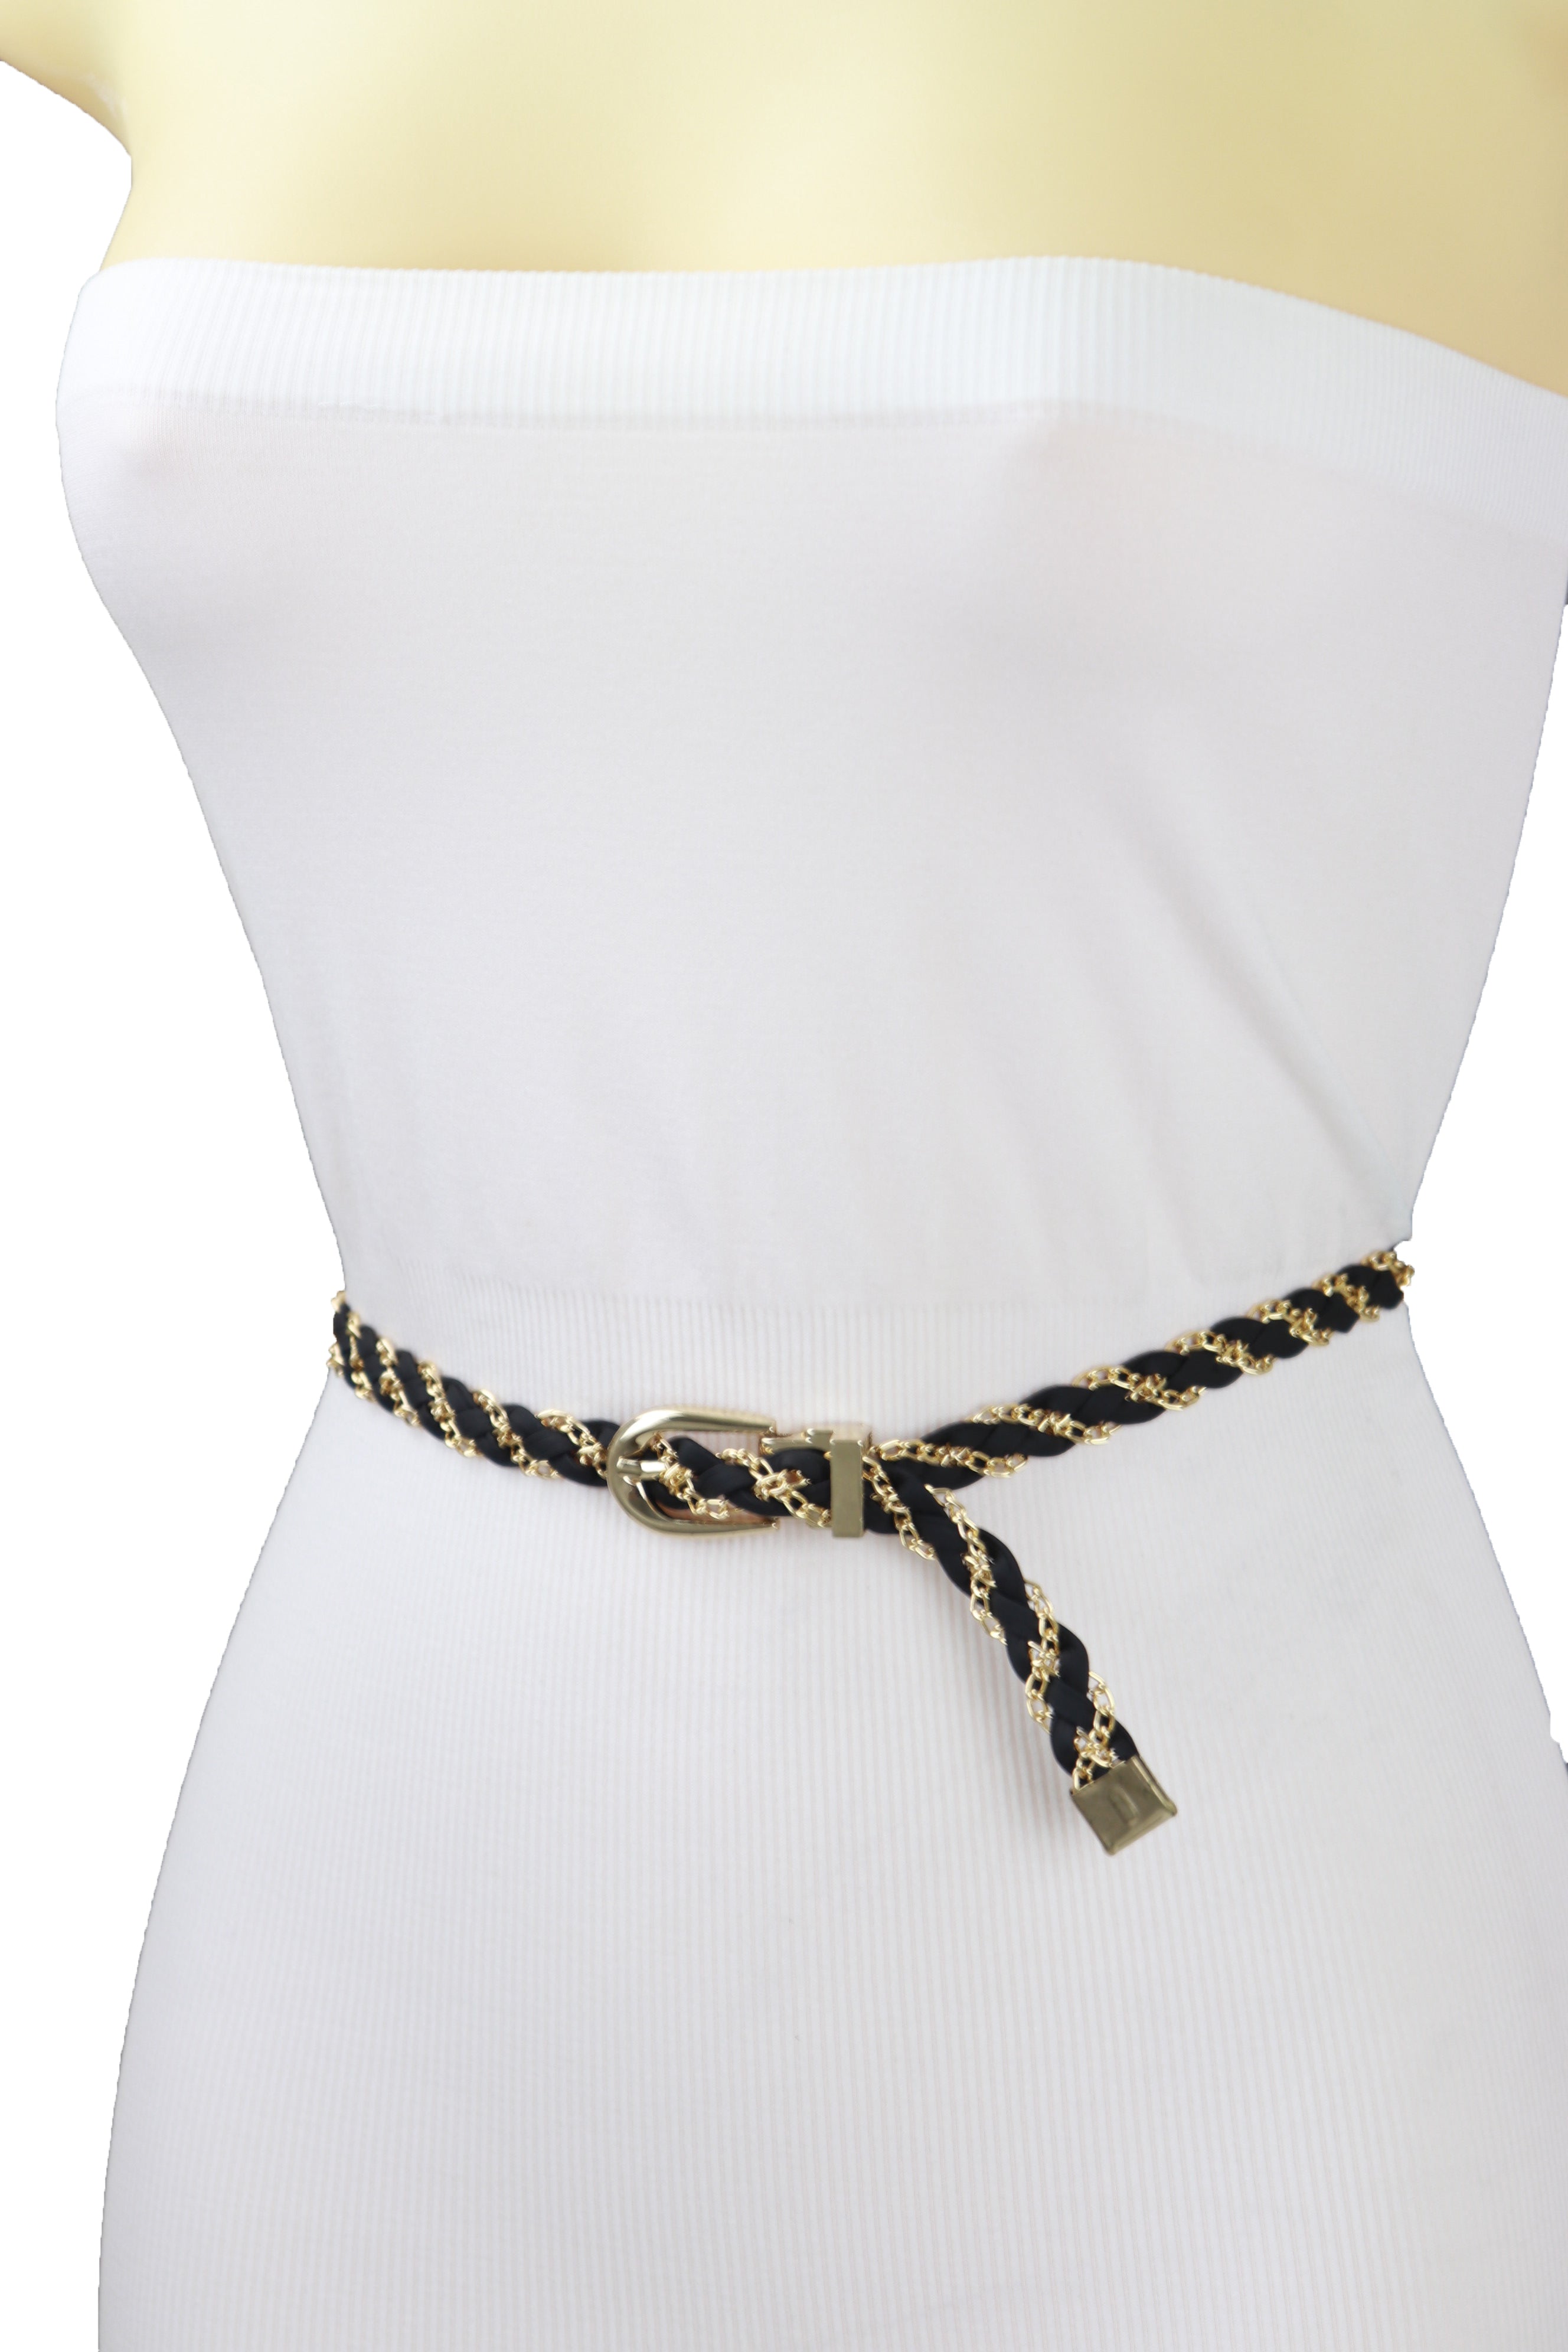 Women Black Elastic Hip High Waist Belt Gold Metal Chain Links Strap Size S  M